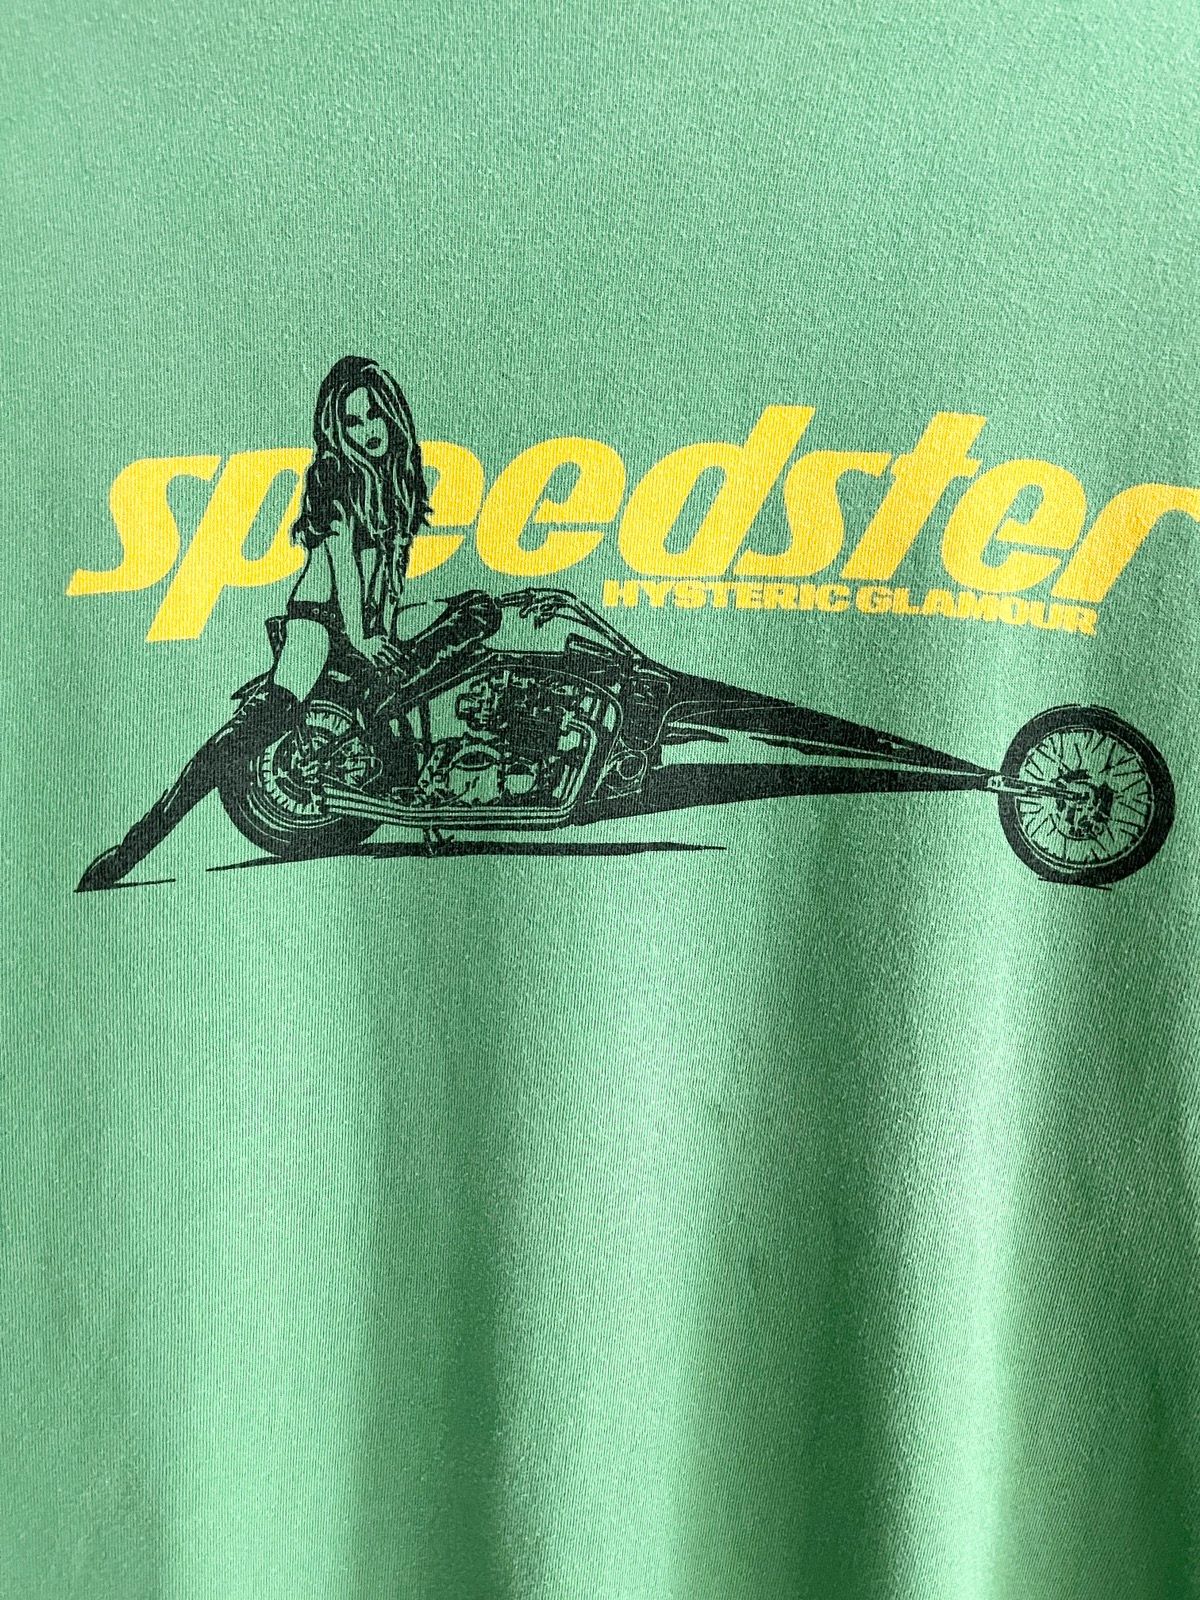 STEAL! 2010s Hysteric Glamour Speedster Biker Girl LS Tee - 3